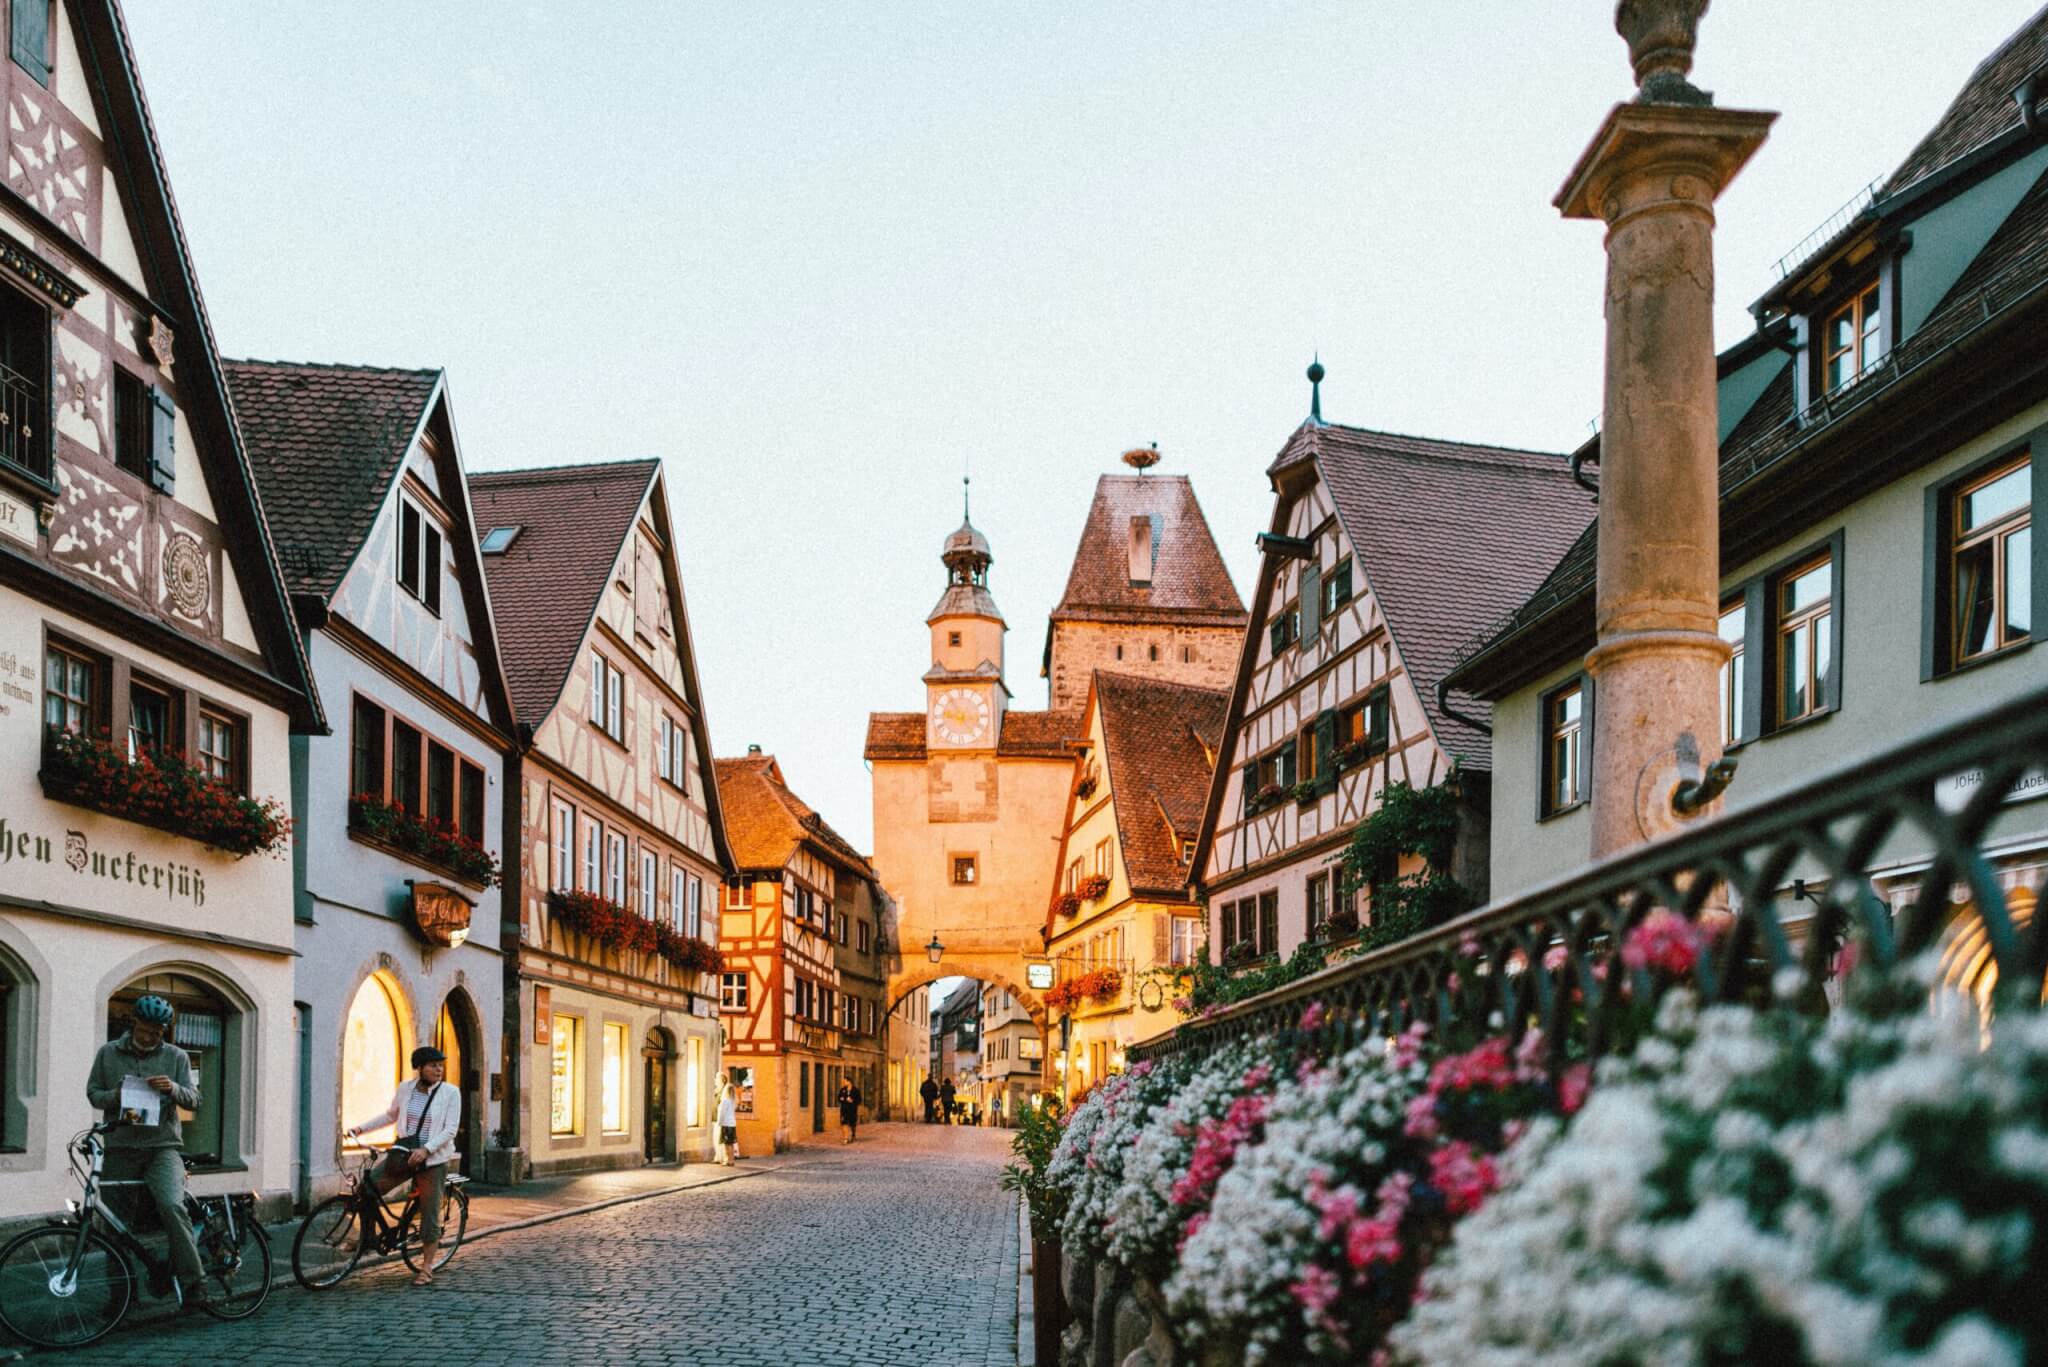 A cobblestone street in Germany